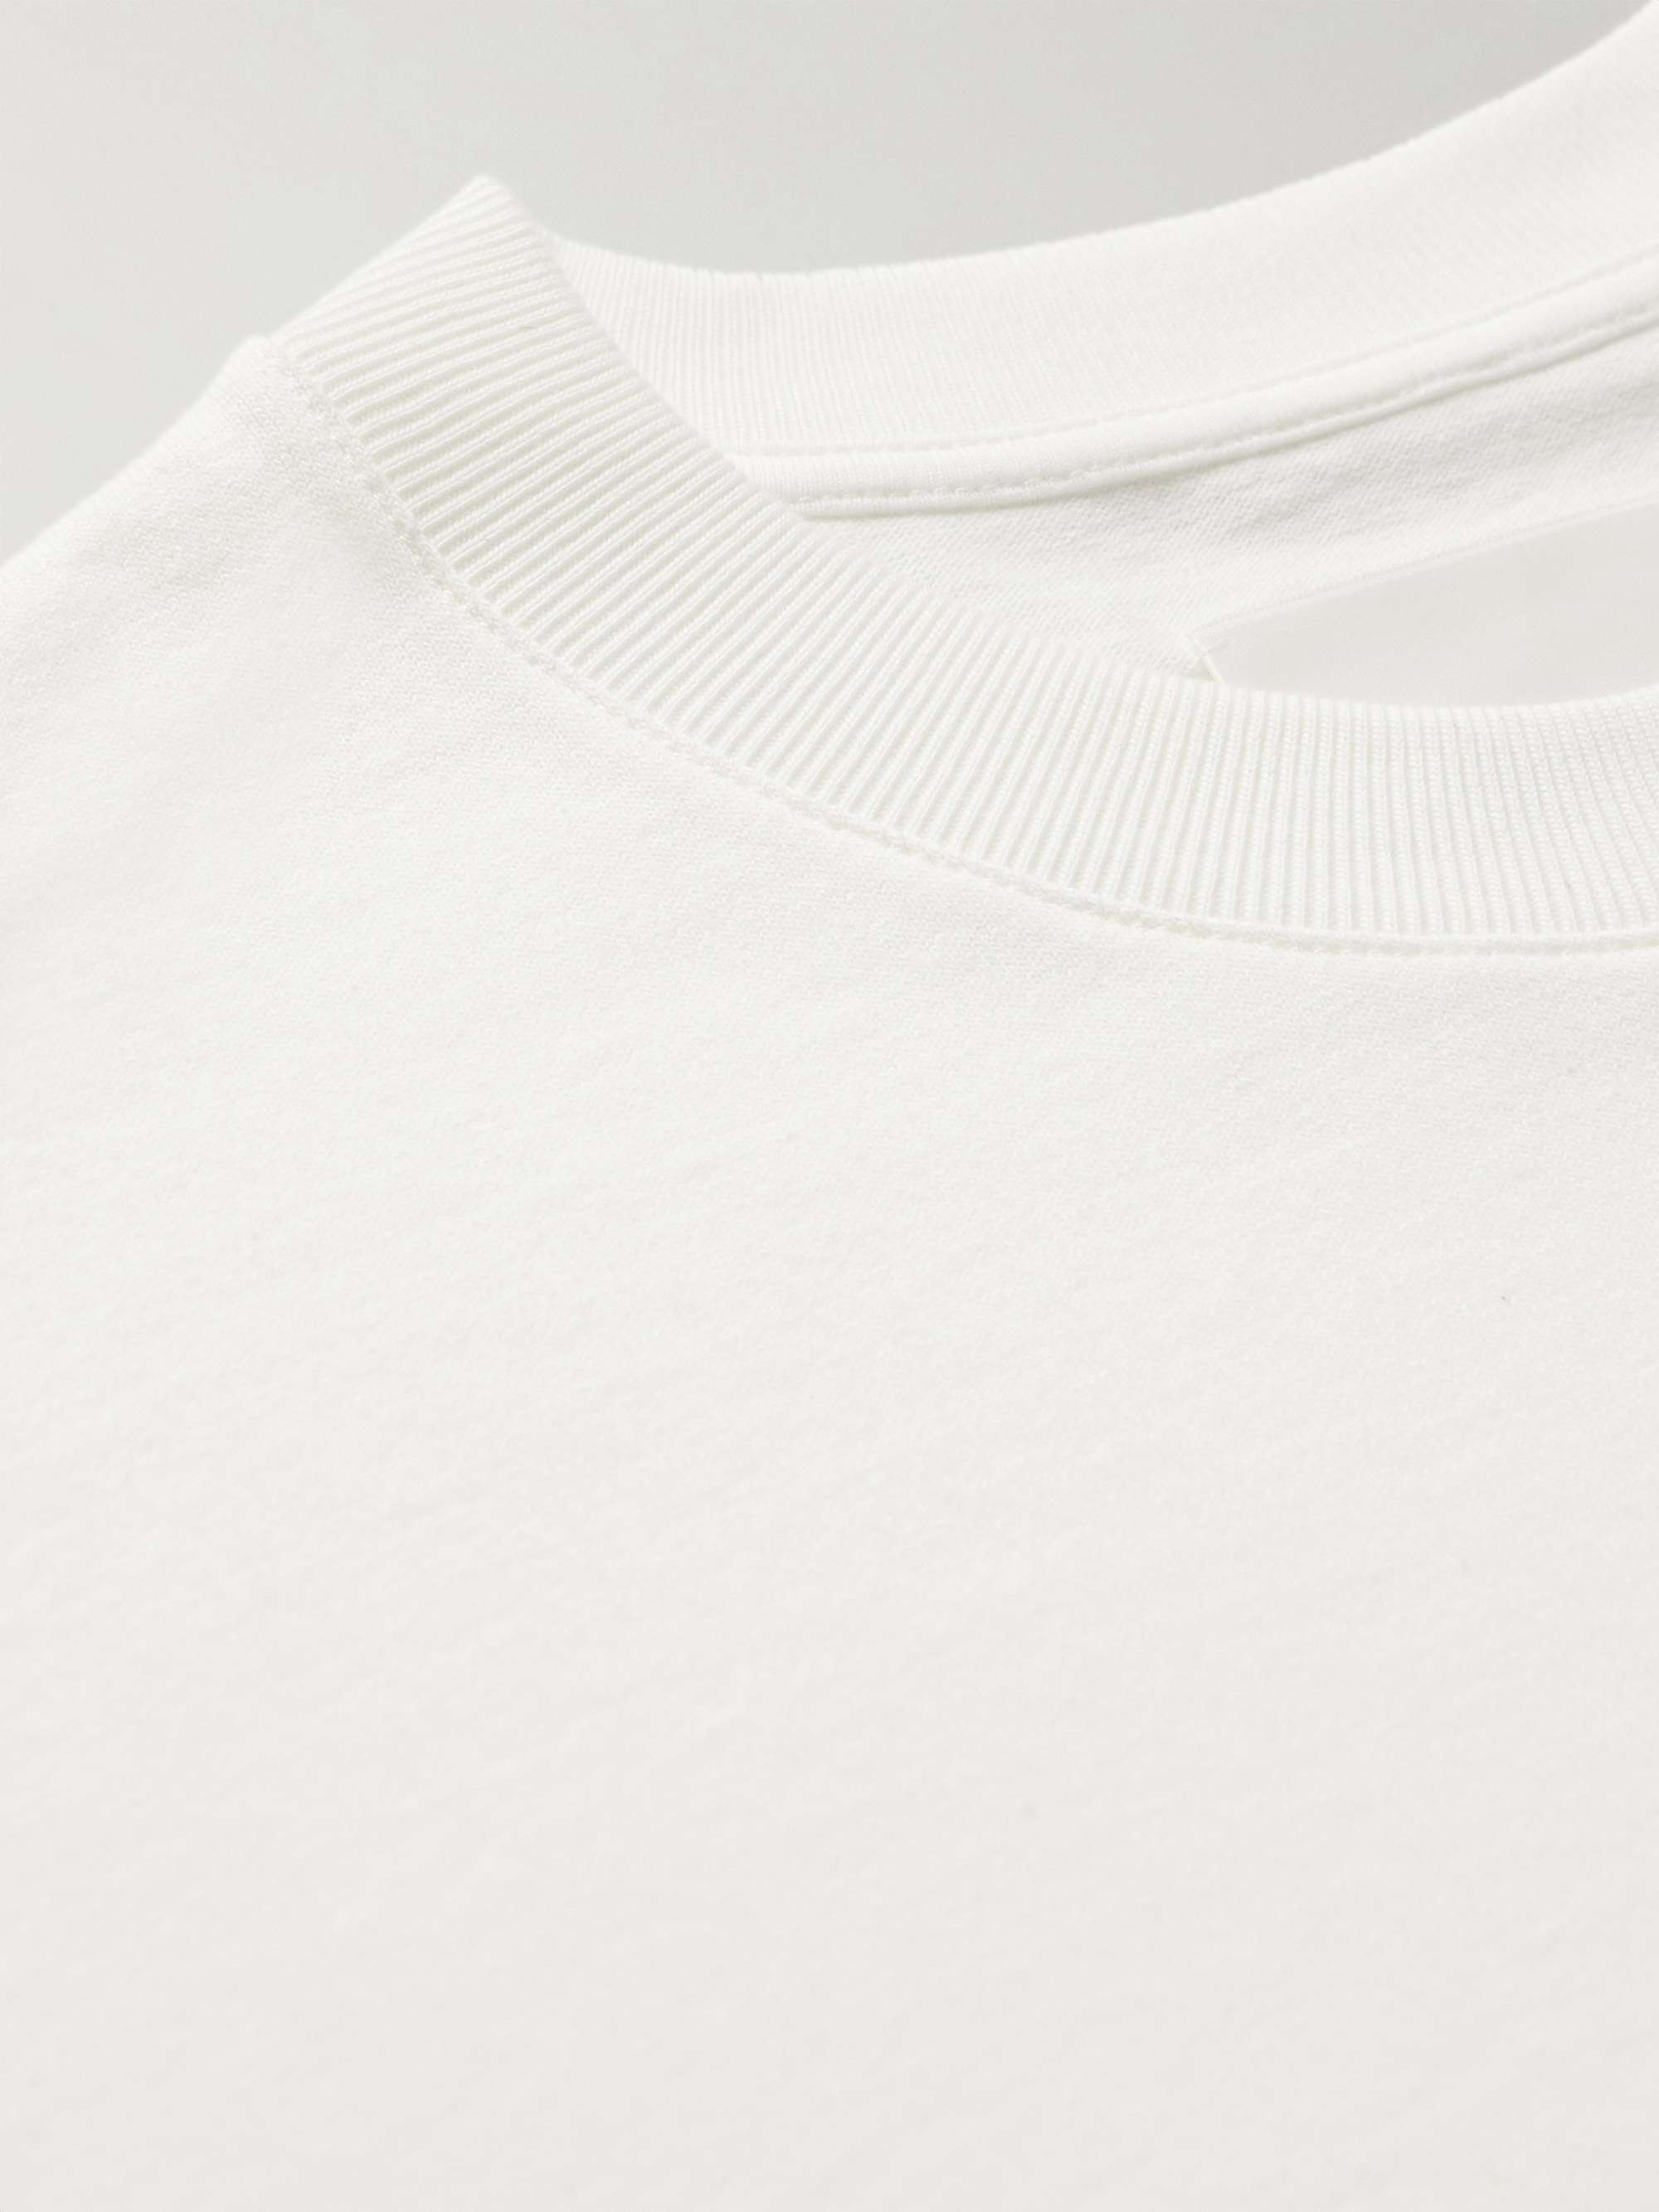 JIL SANDER Logo-Printed Cotton-Jersey T-Shirt